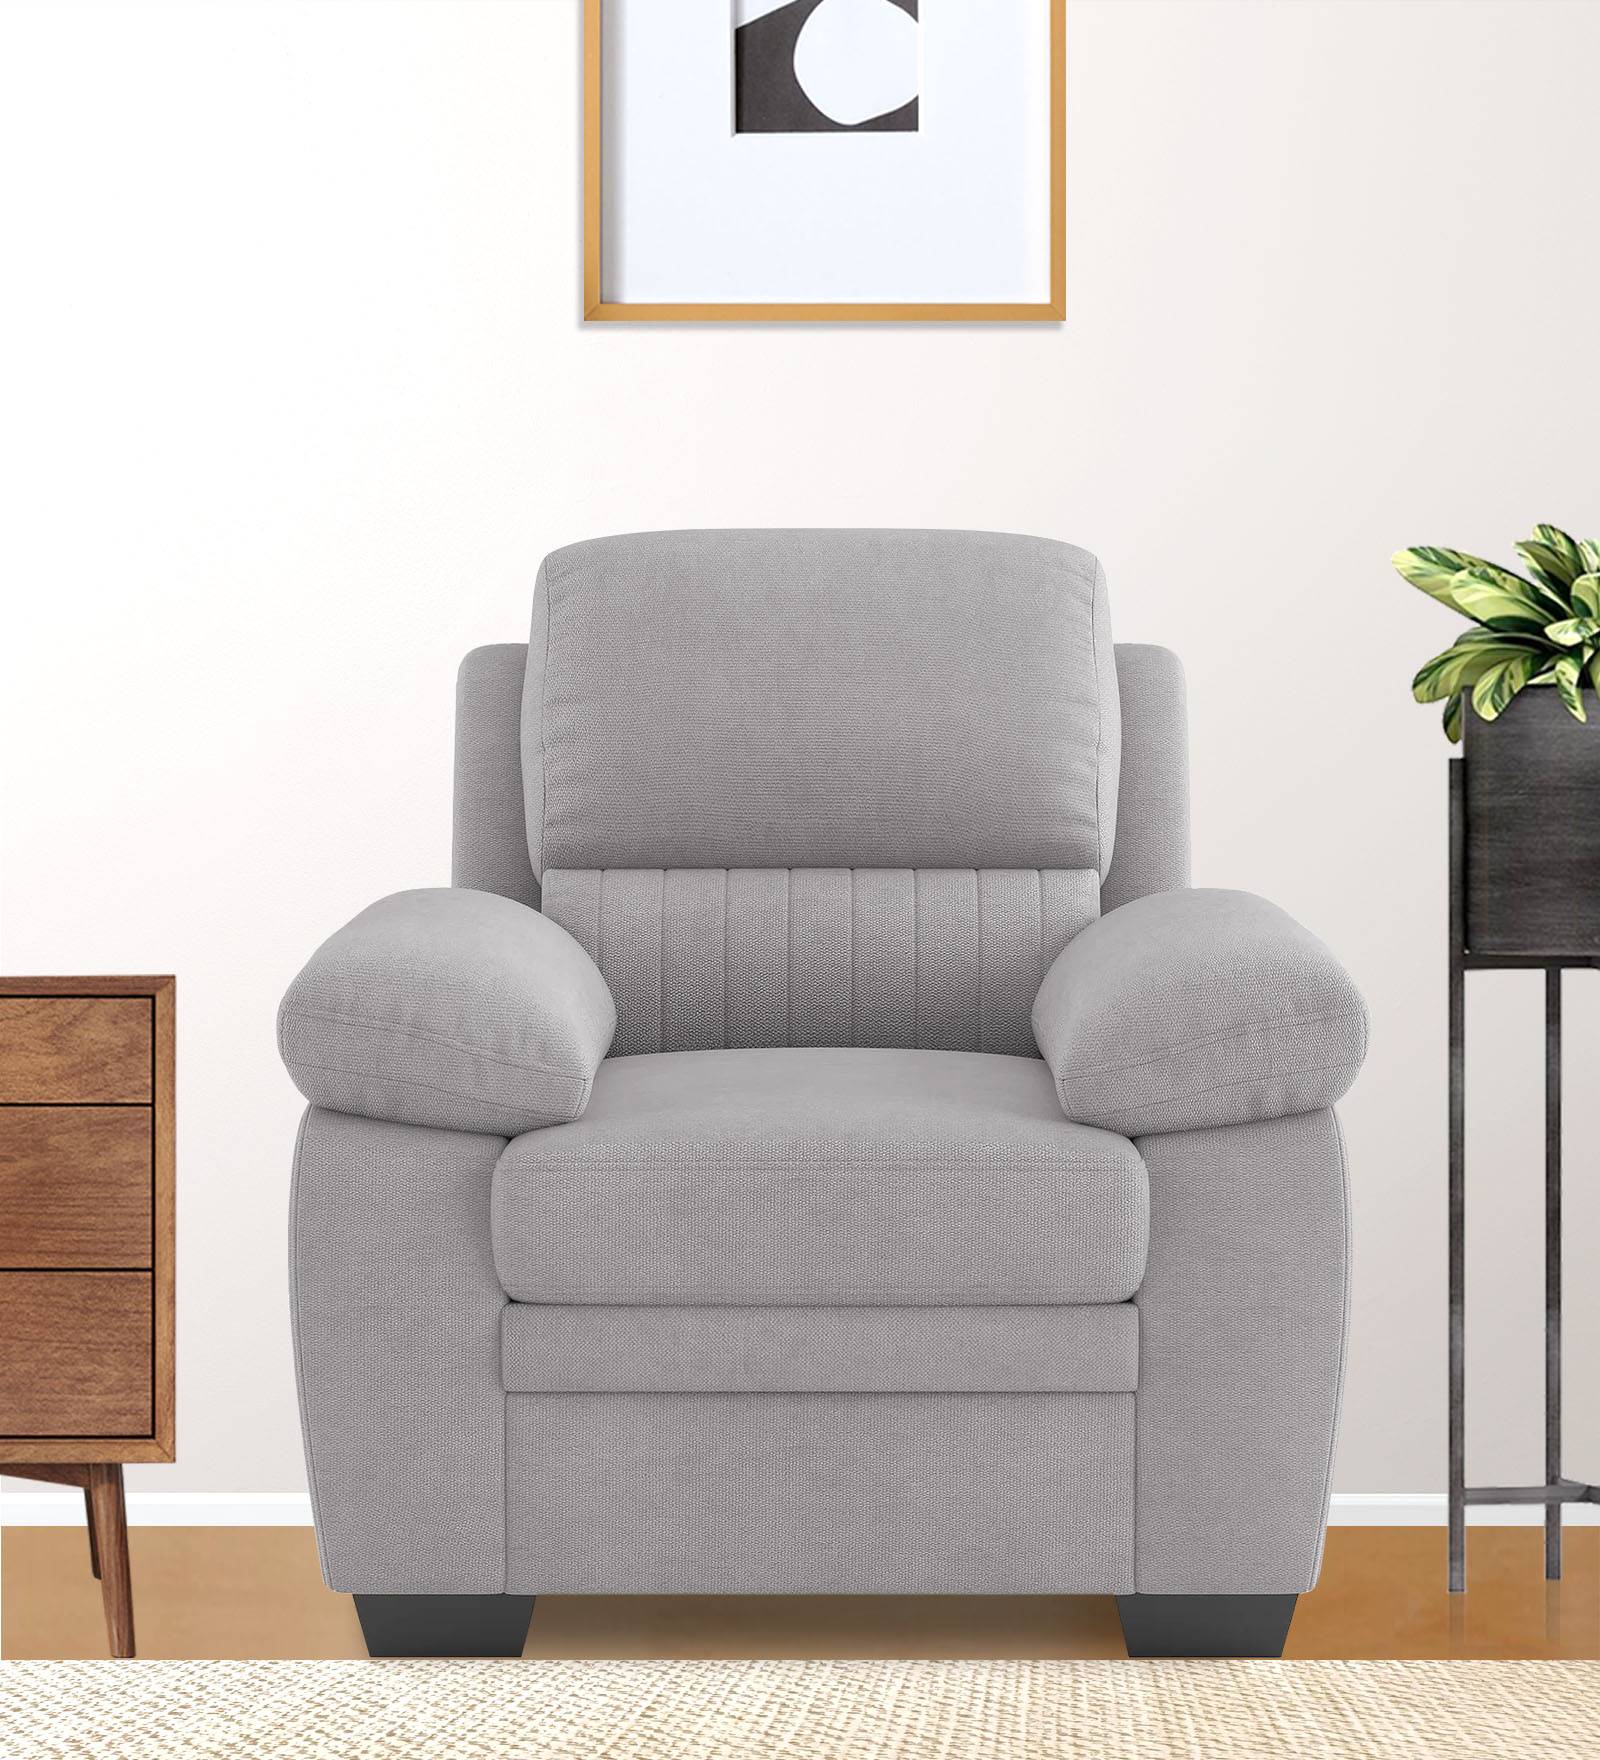 Miranda Velvet 1 Seater Sofa in Concrete grey Colour